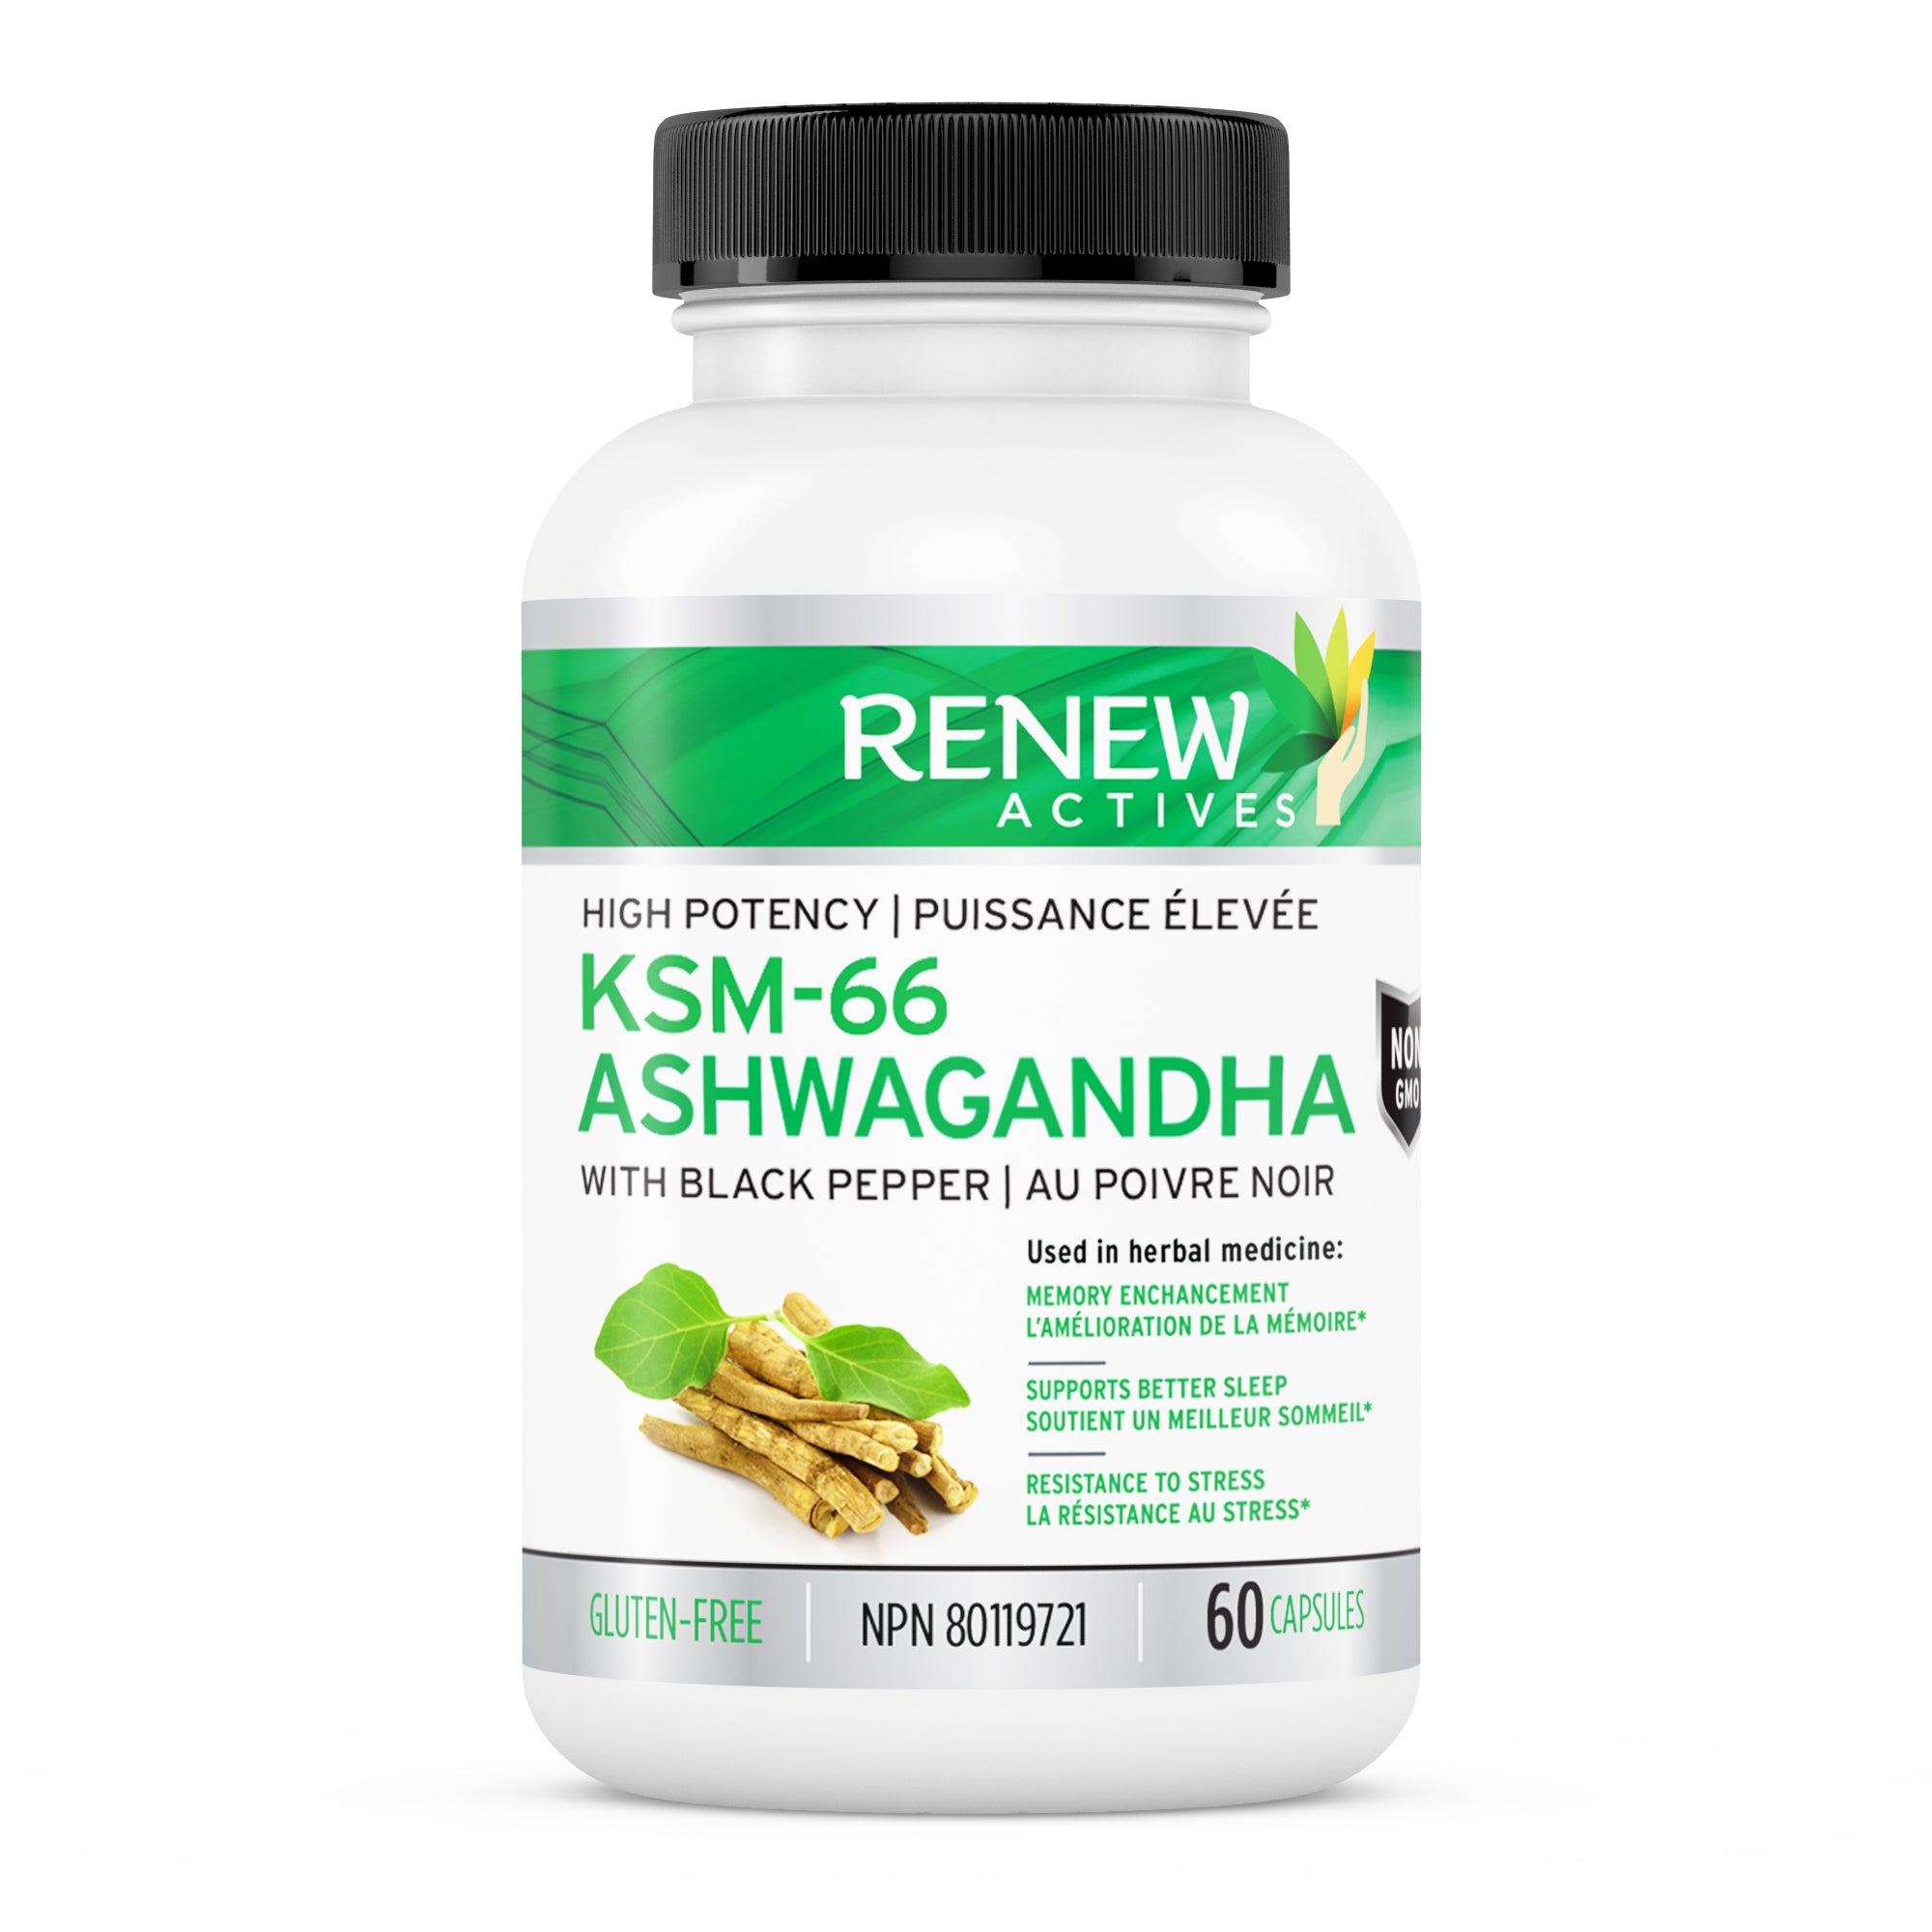 Renew Actives Ashwagandha KSM-66 Capsules - 60 Easy to Swallow Capsules